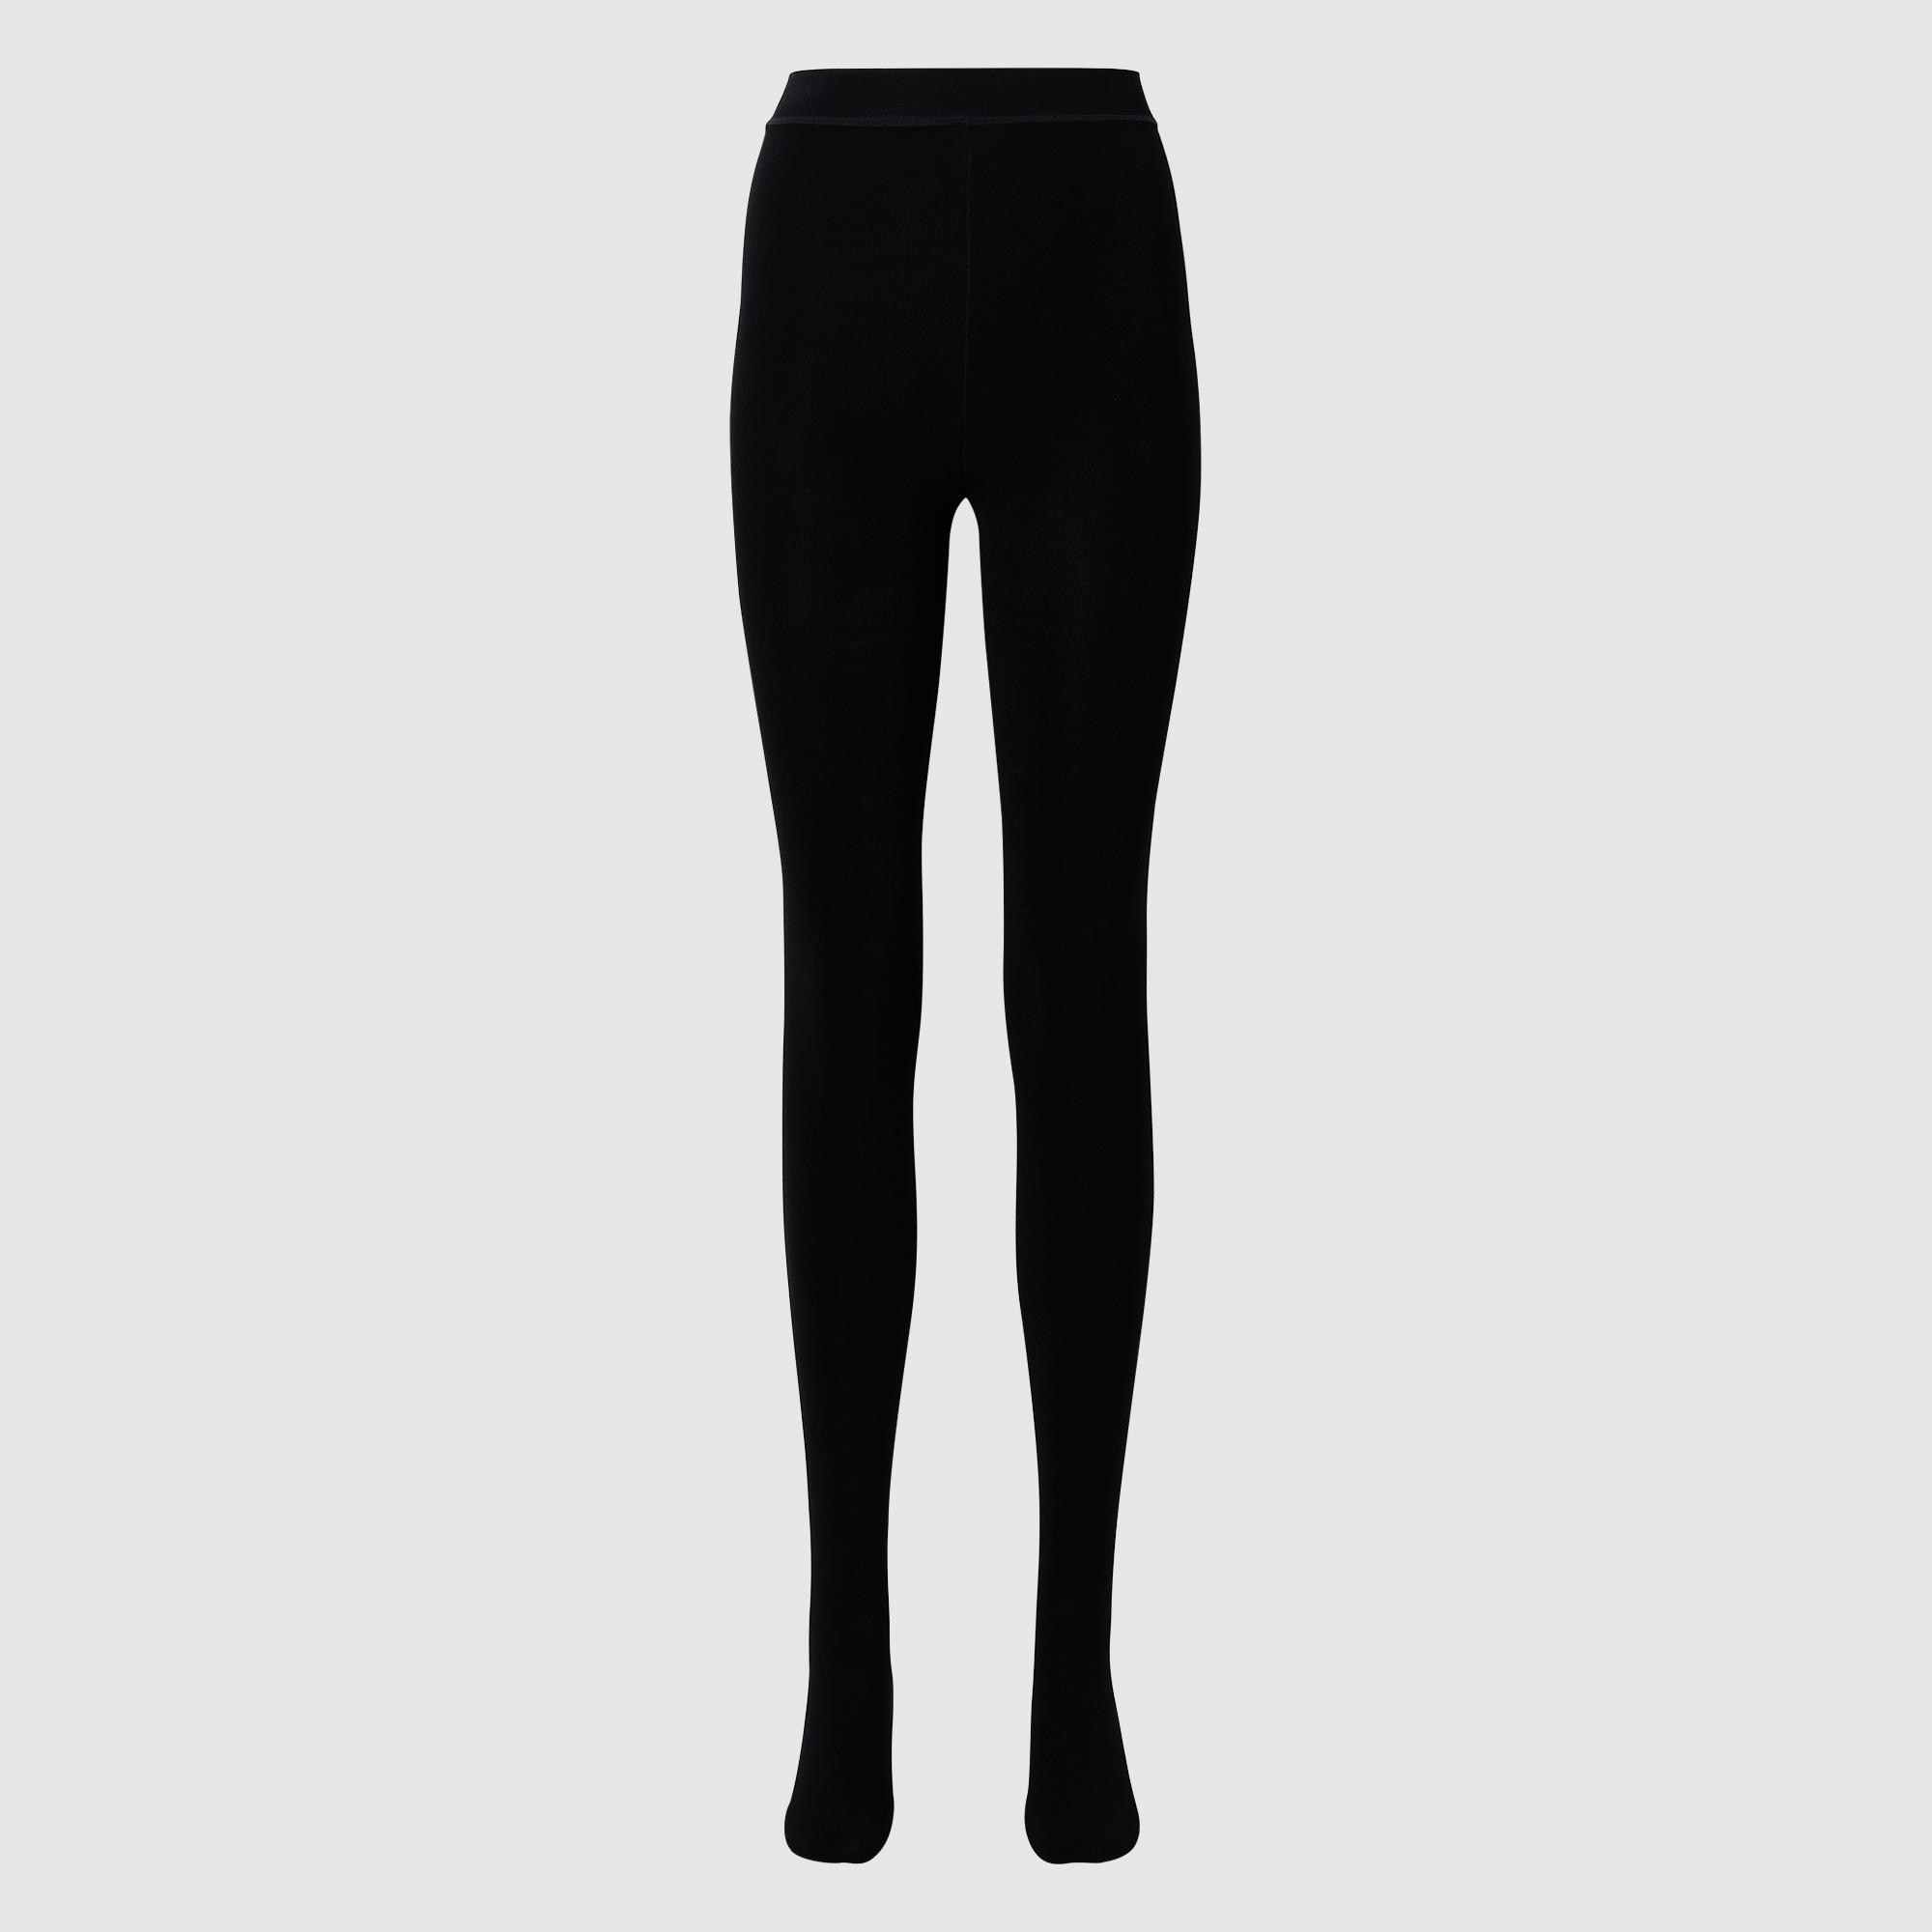 Pants & Jumpsuits, New Black Fuzzy Leggings Warm Fleece Lined Tights